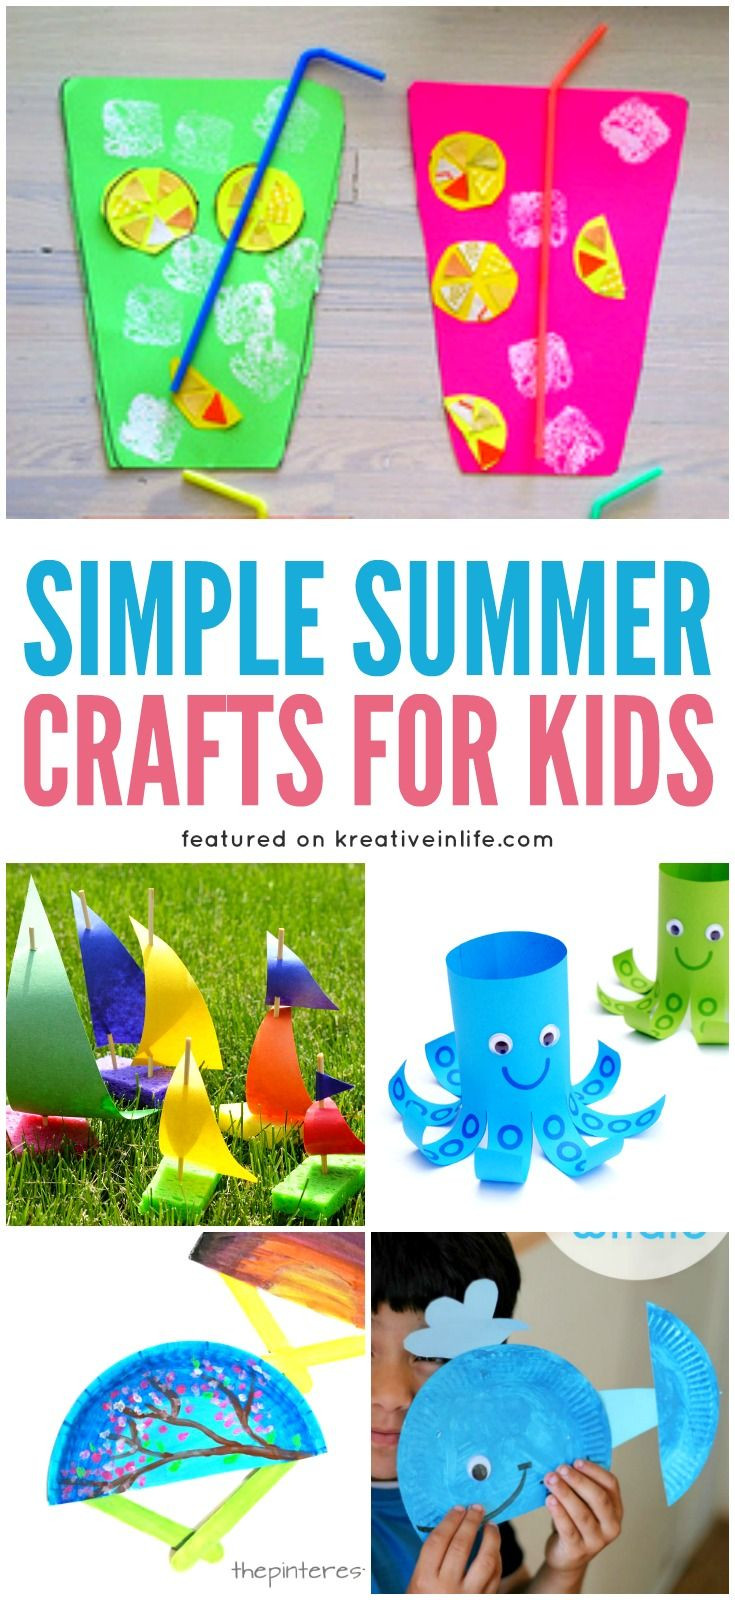 Summer Craft For Toddlers
 Best 25 Summer crafts ideas on Pinterest